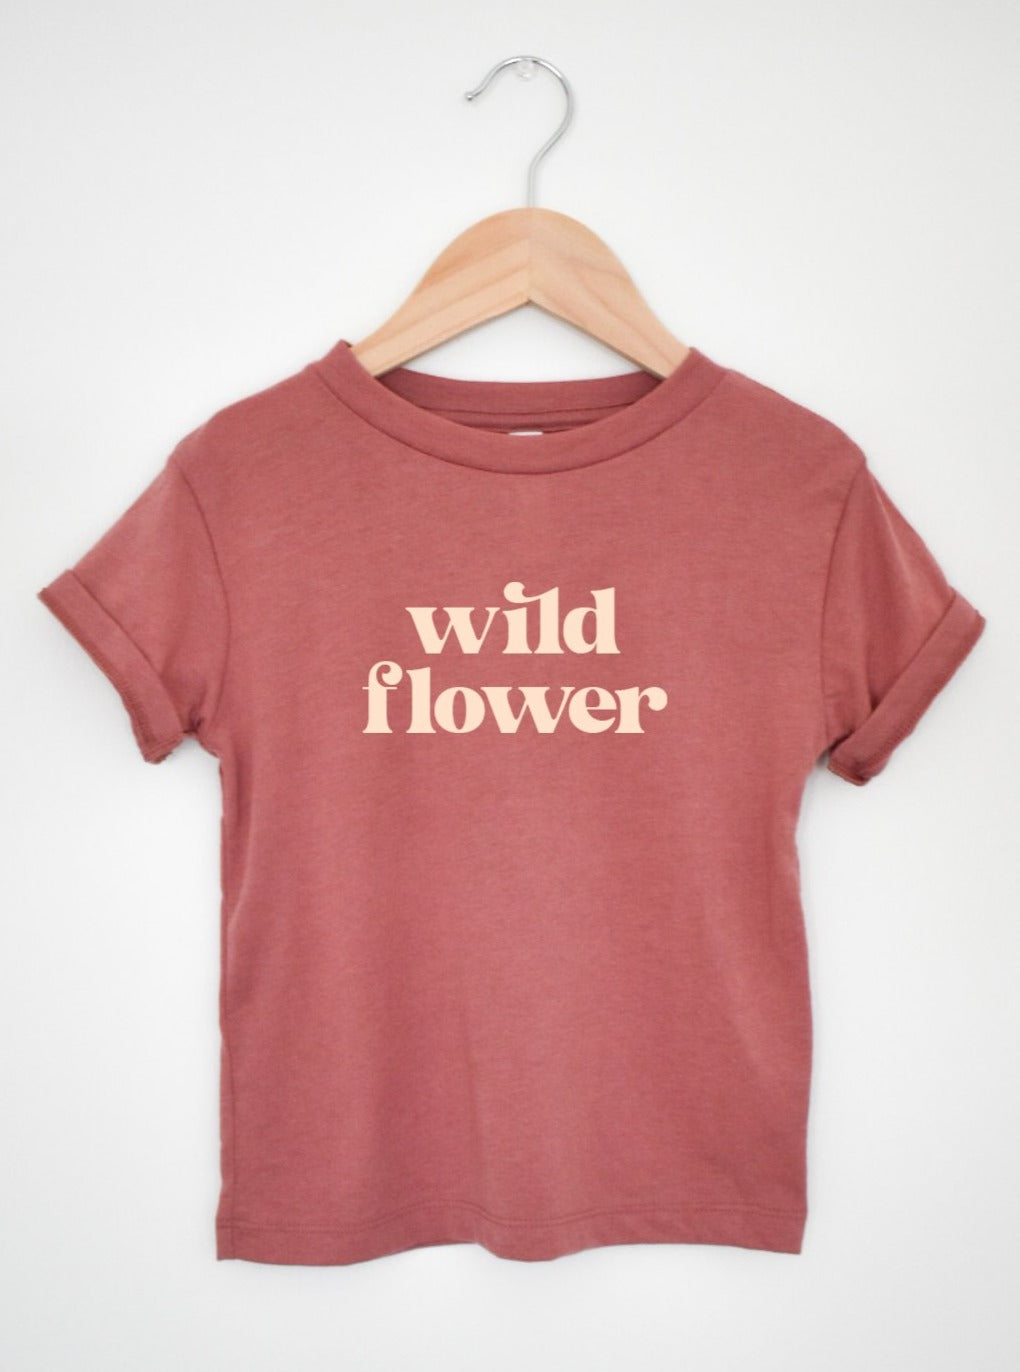 Wild Flower Navy Rayon Shirt